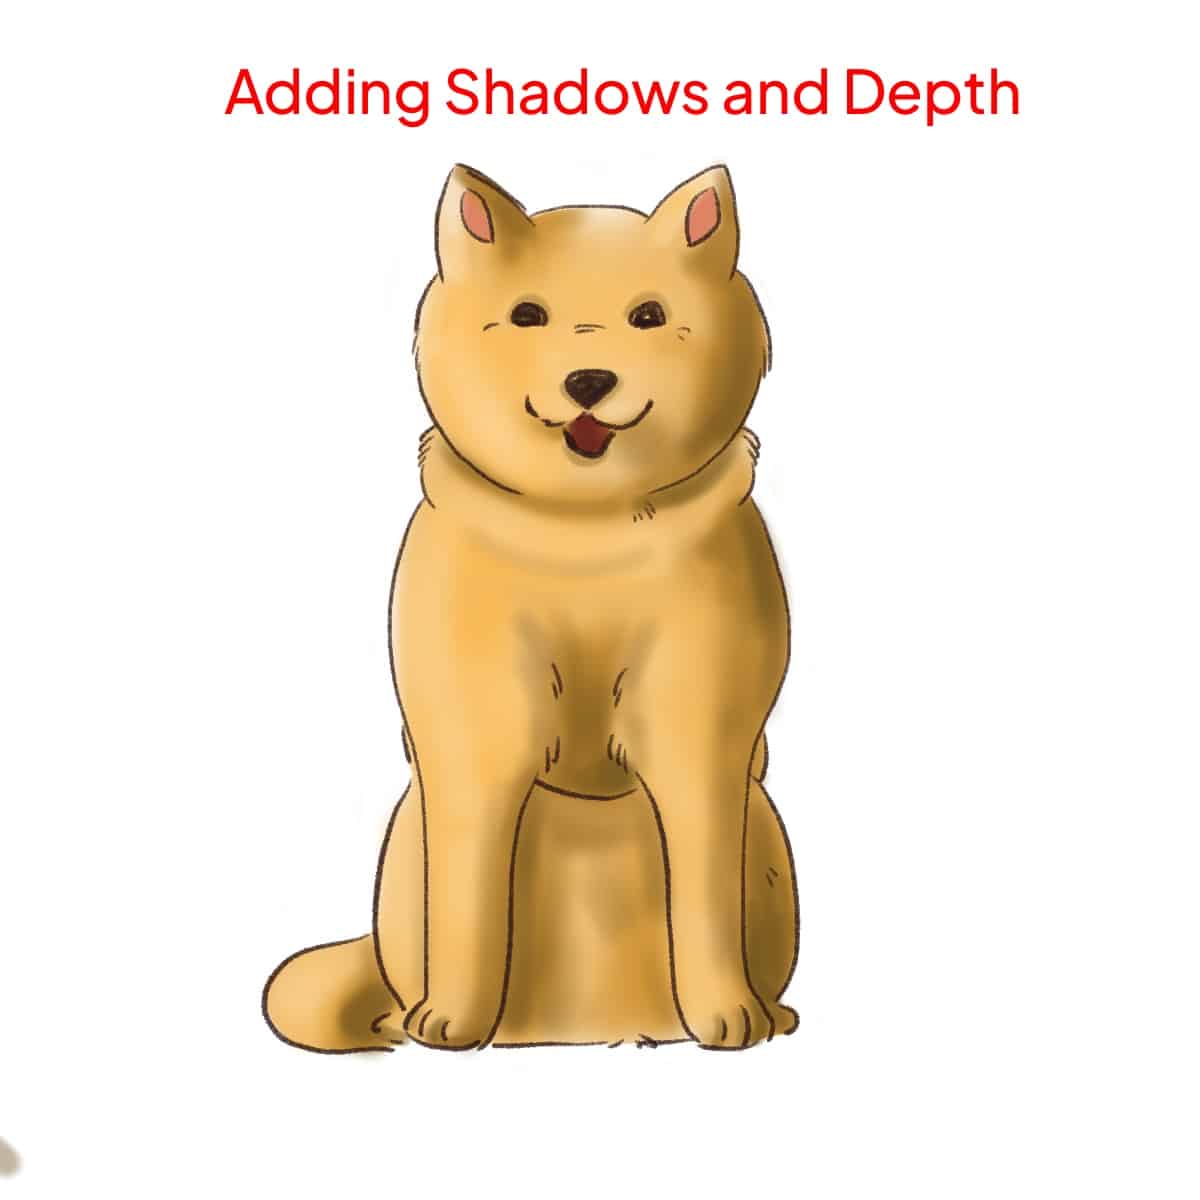 Adding shadows and depth